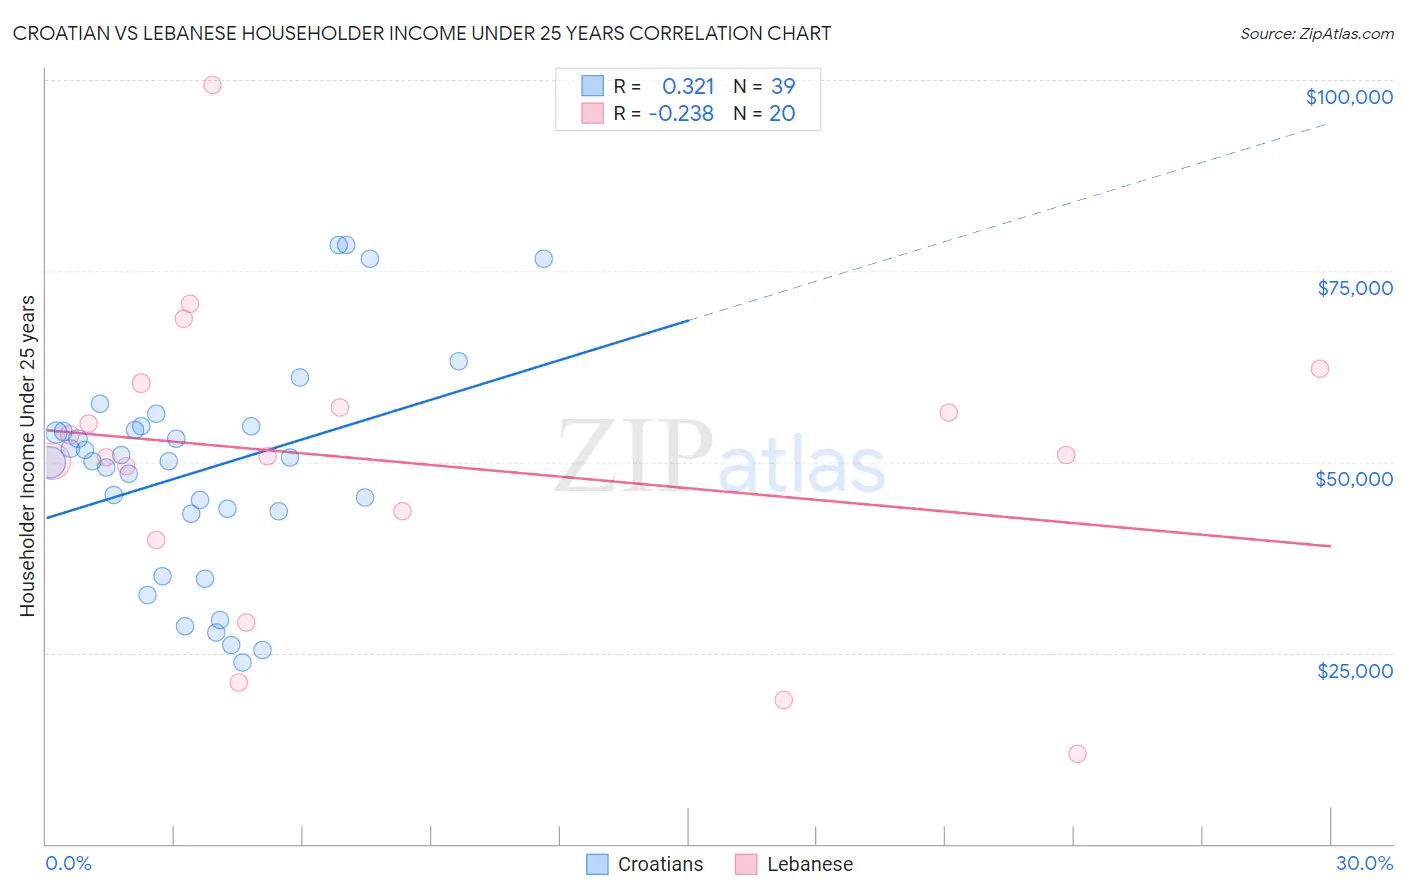 Croatian vs Lebanese Householder Income Under 25 years